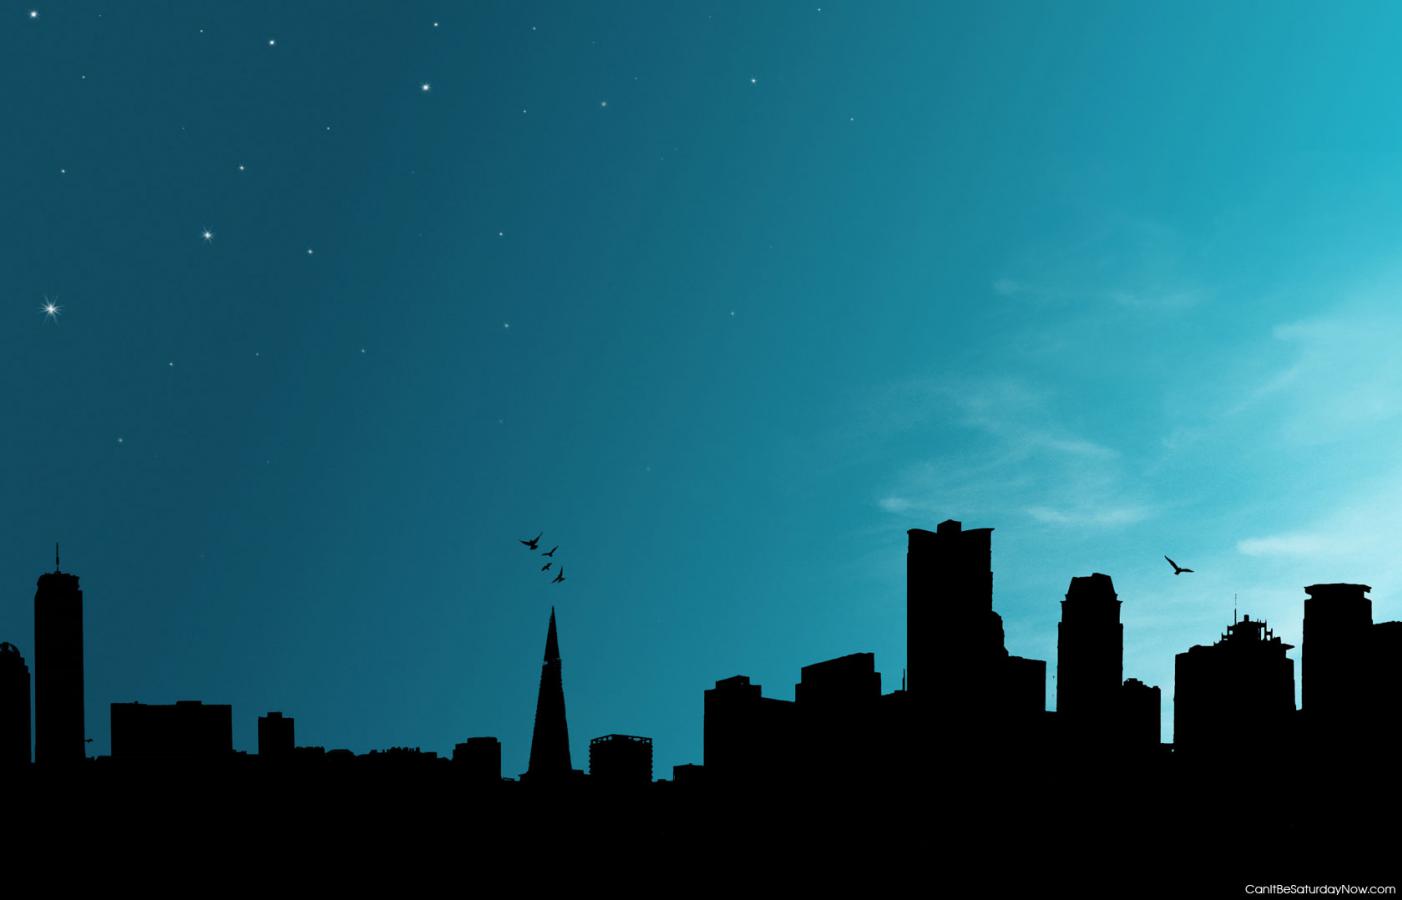 Blue night line - blue sky with city